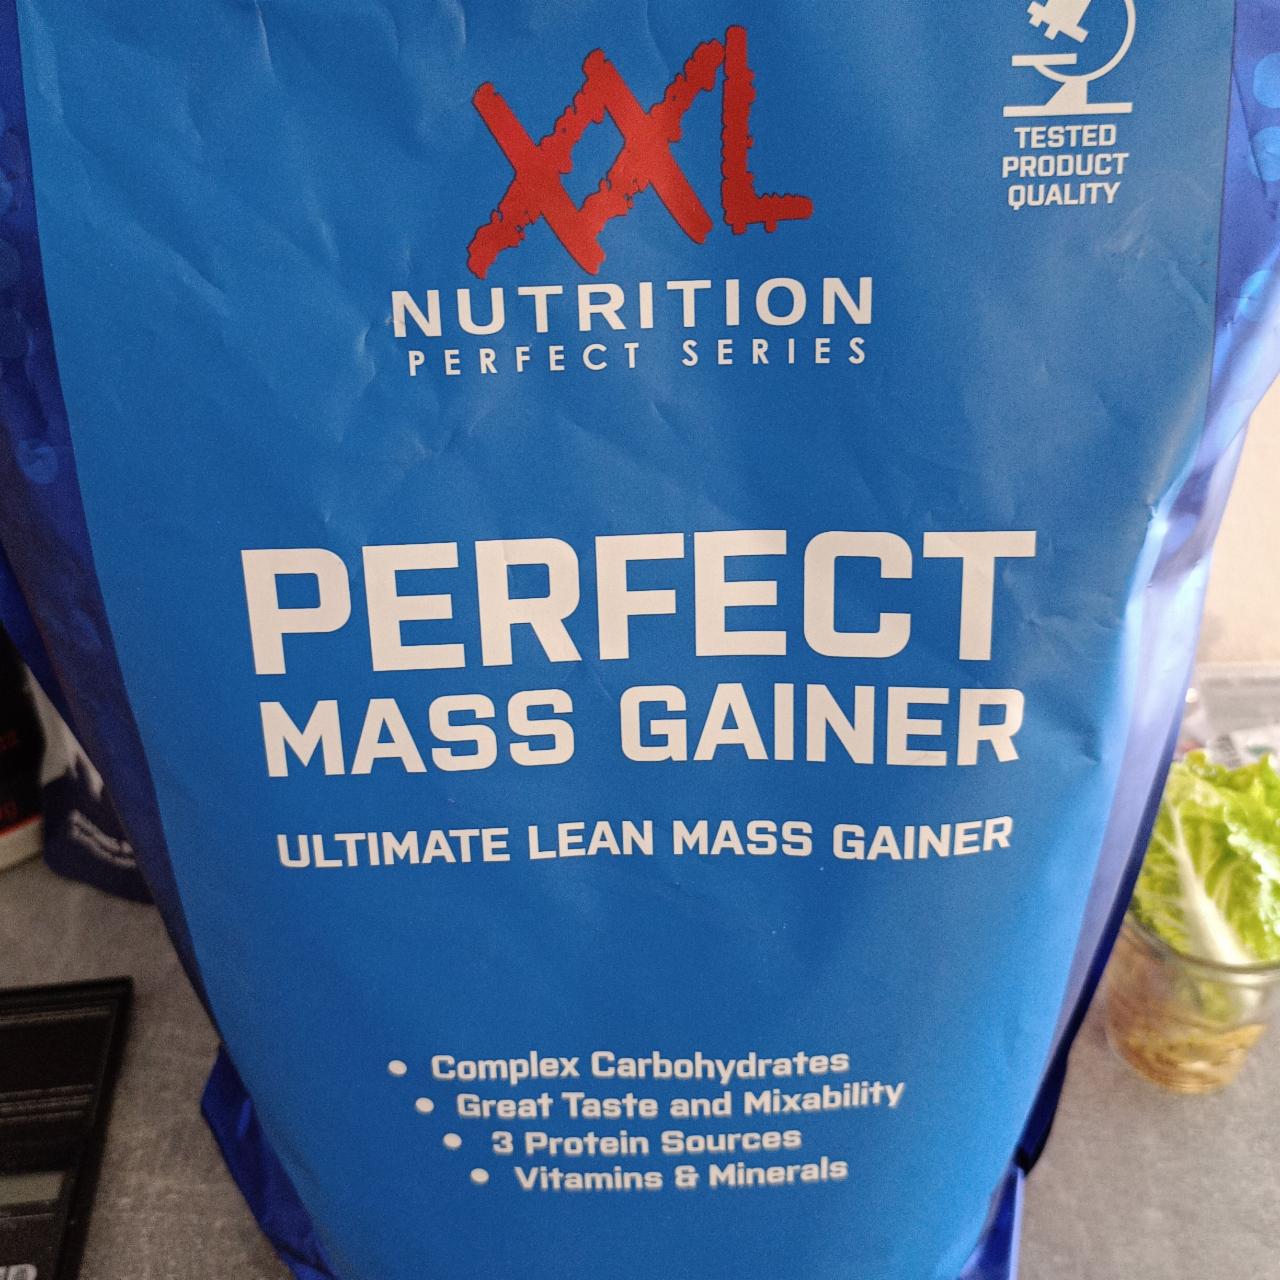 Fotografie - perfect mass gainer xxl Nutrition Perfect Series